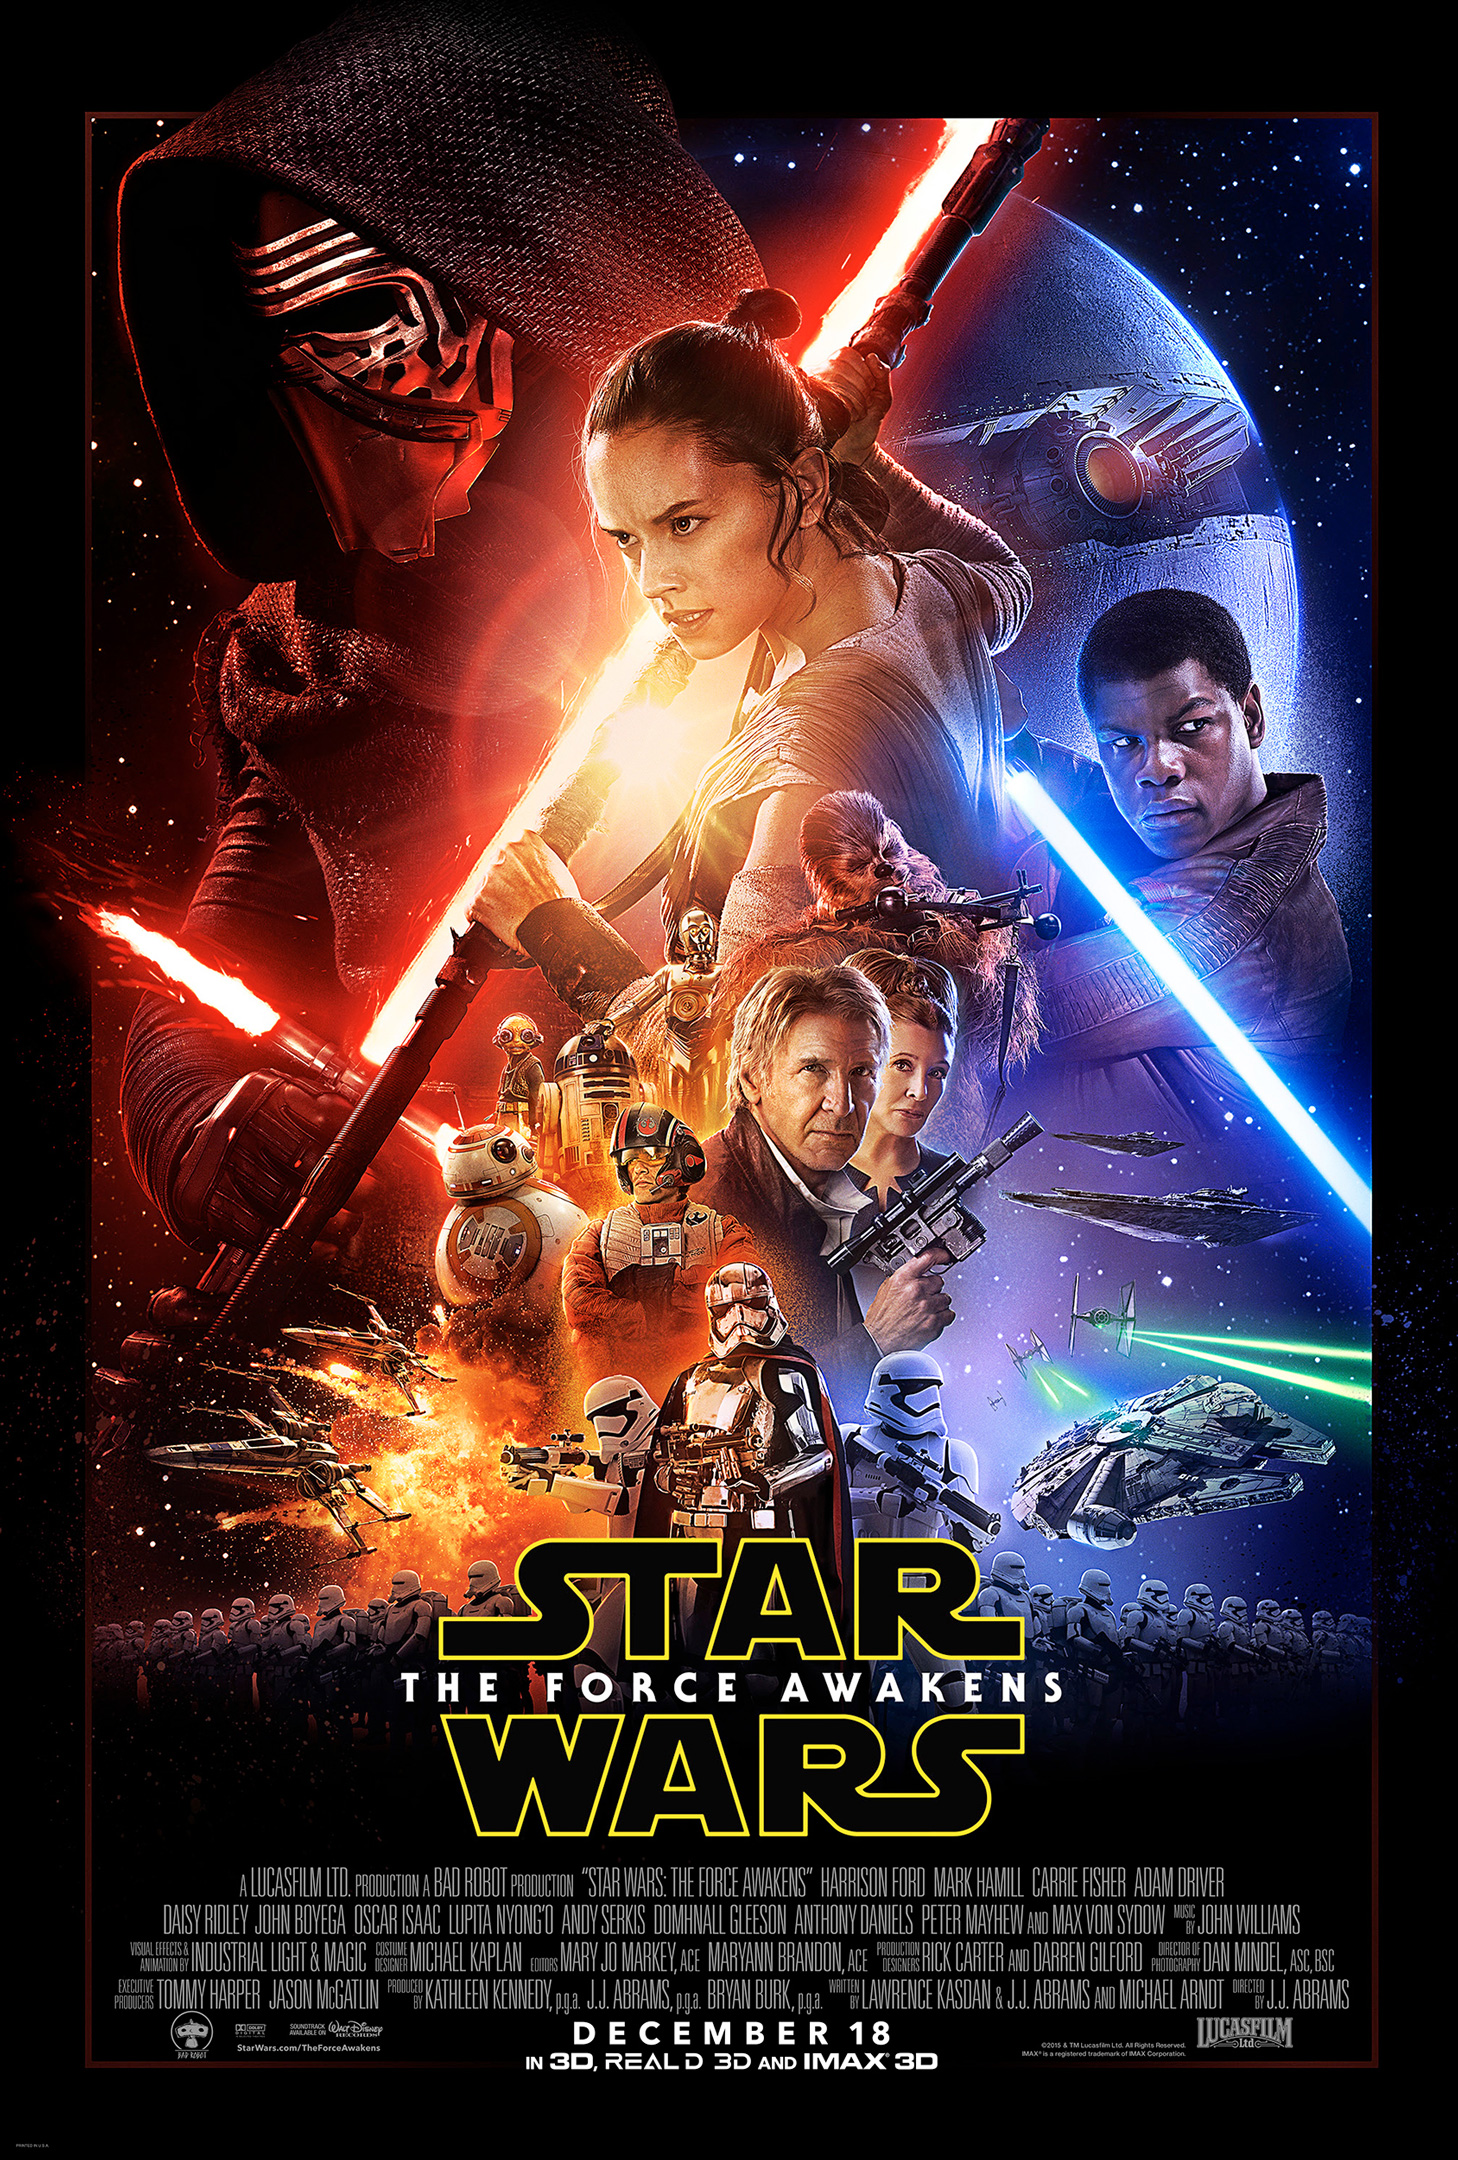 Stiahni si Filmy CZ/SK dabing Star Wars: Sila se probouzi / Star Wars: The Force Awakens (2015)(CZ/SK/EN)[1080p] = CSFD 75%